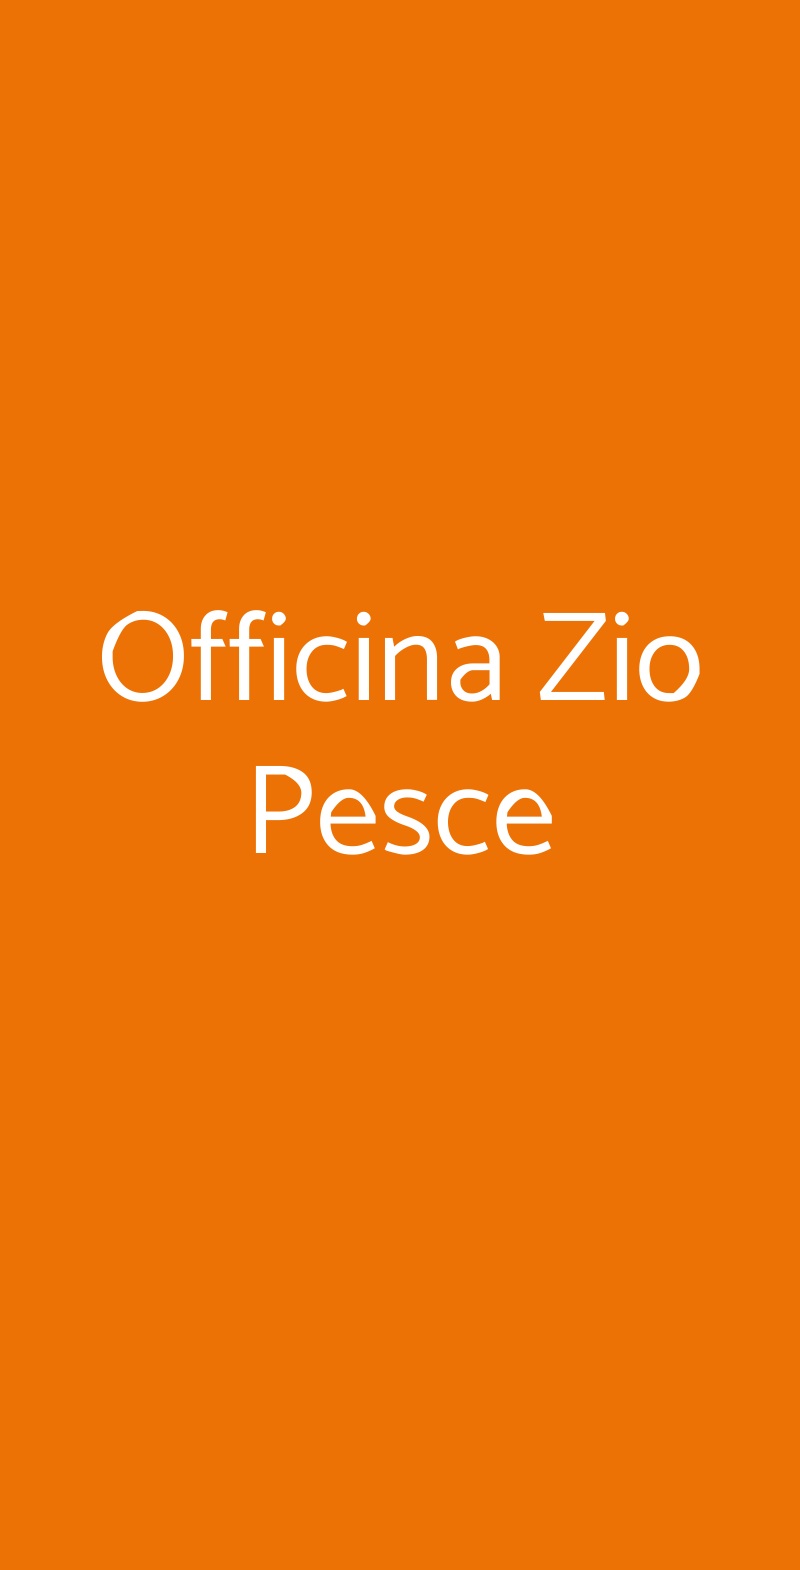 Officina Zio Pesce Caserta menù 1 pagina